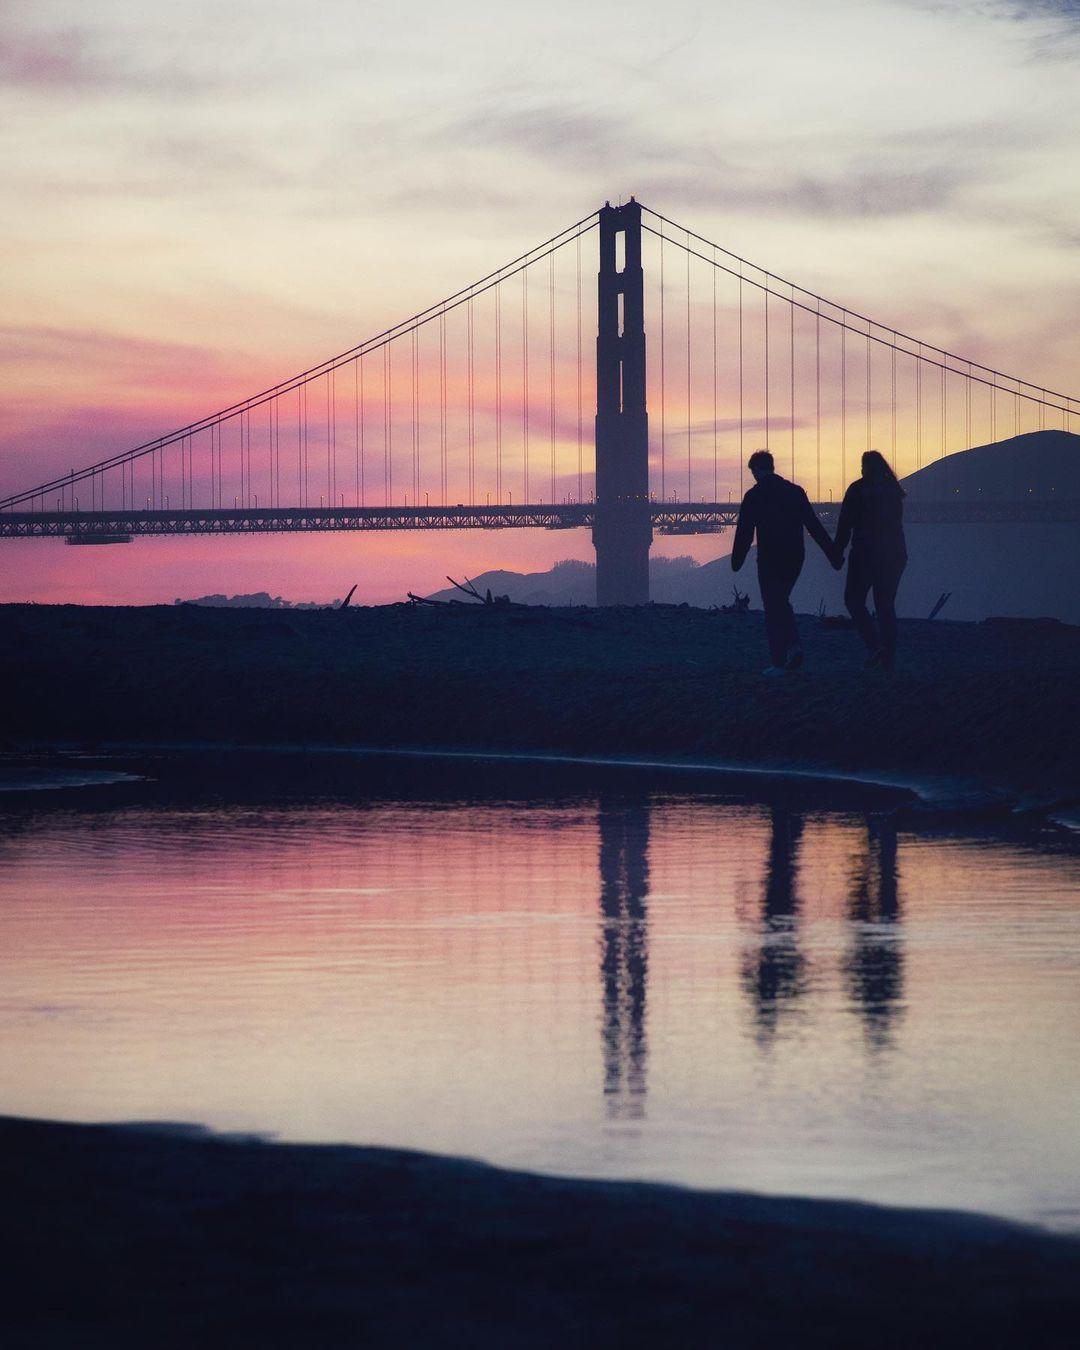 instagram image of the golden gate bridge at sunset